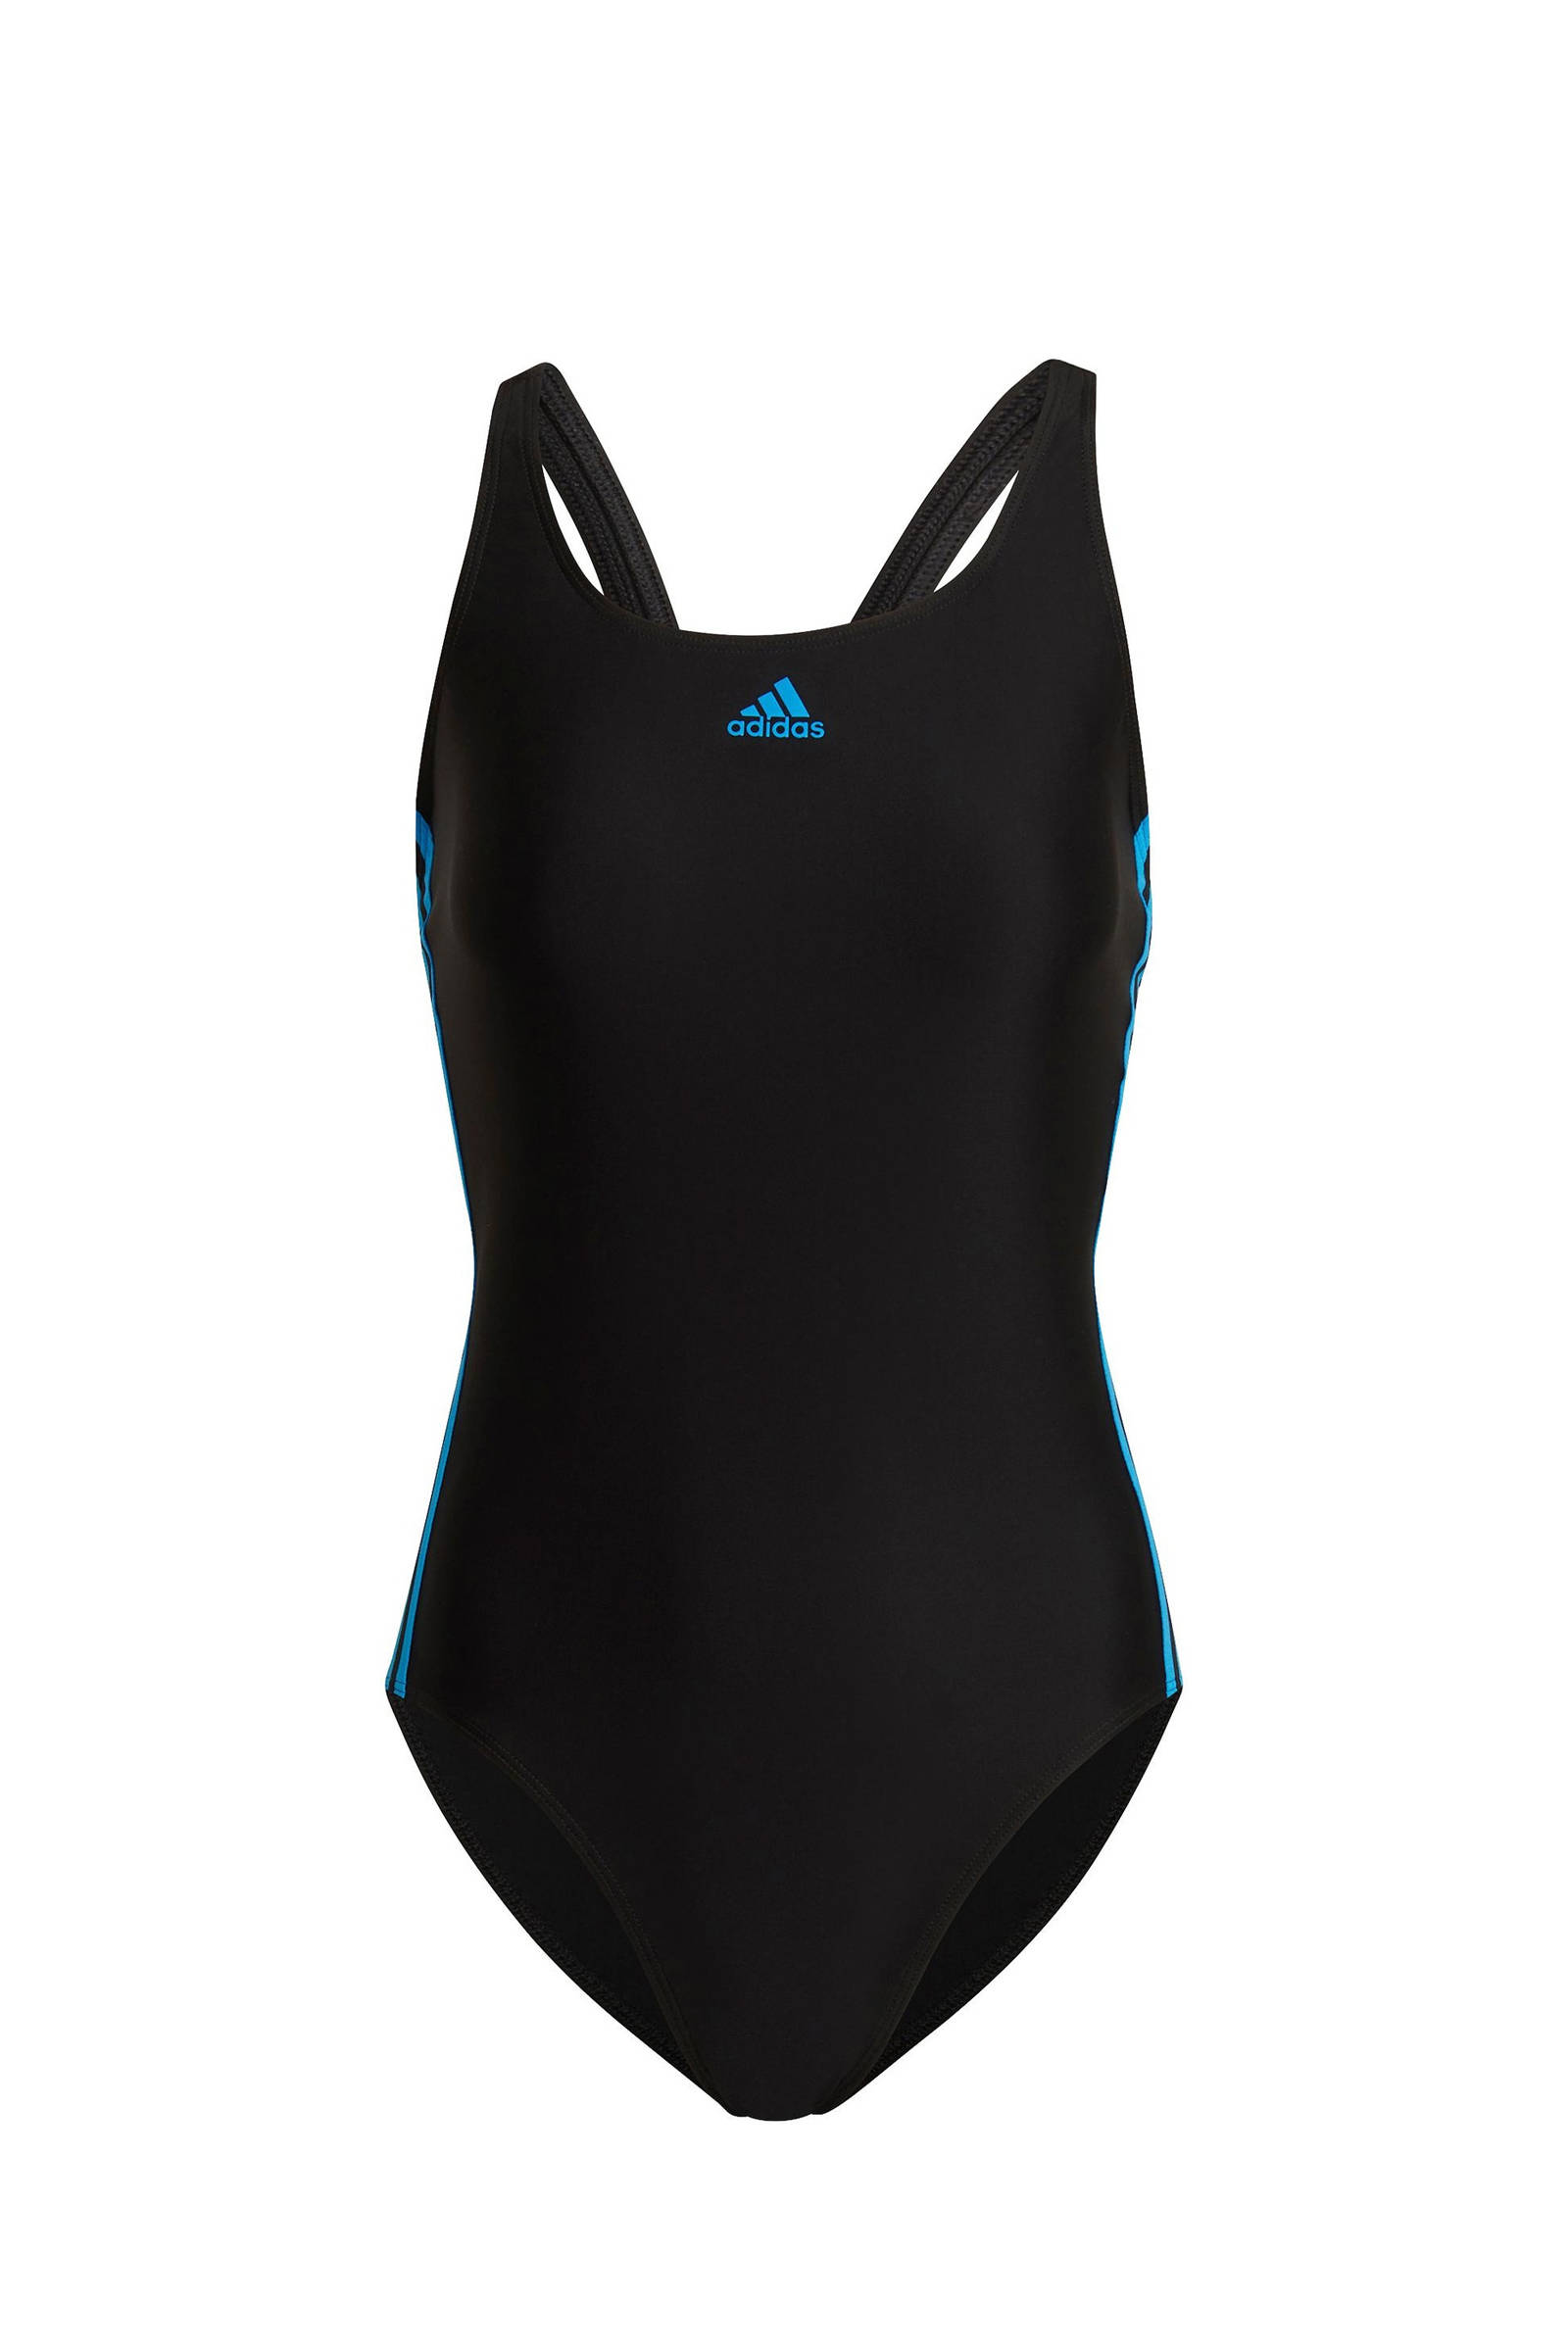 Adidas Performance Infinitex sportbadpak zwart/blauw online kopen